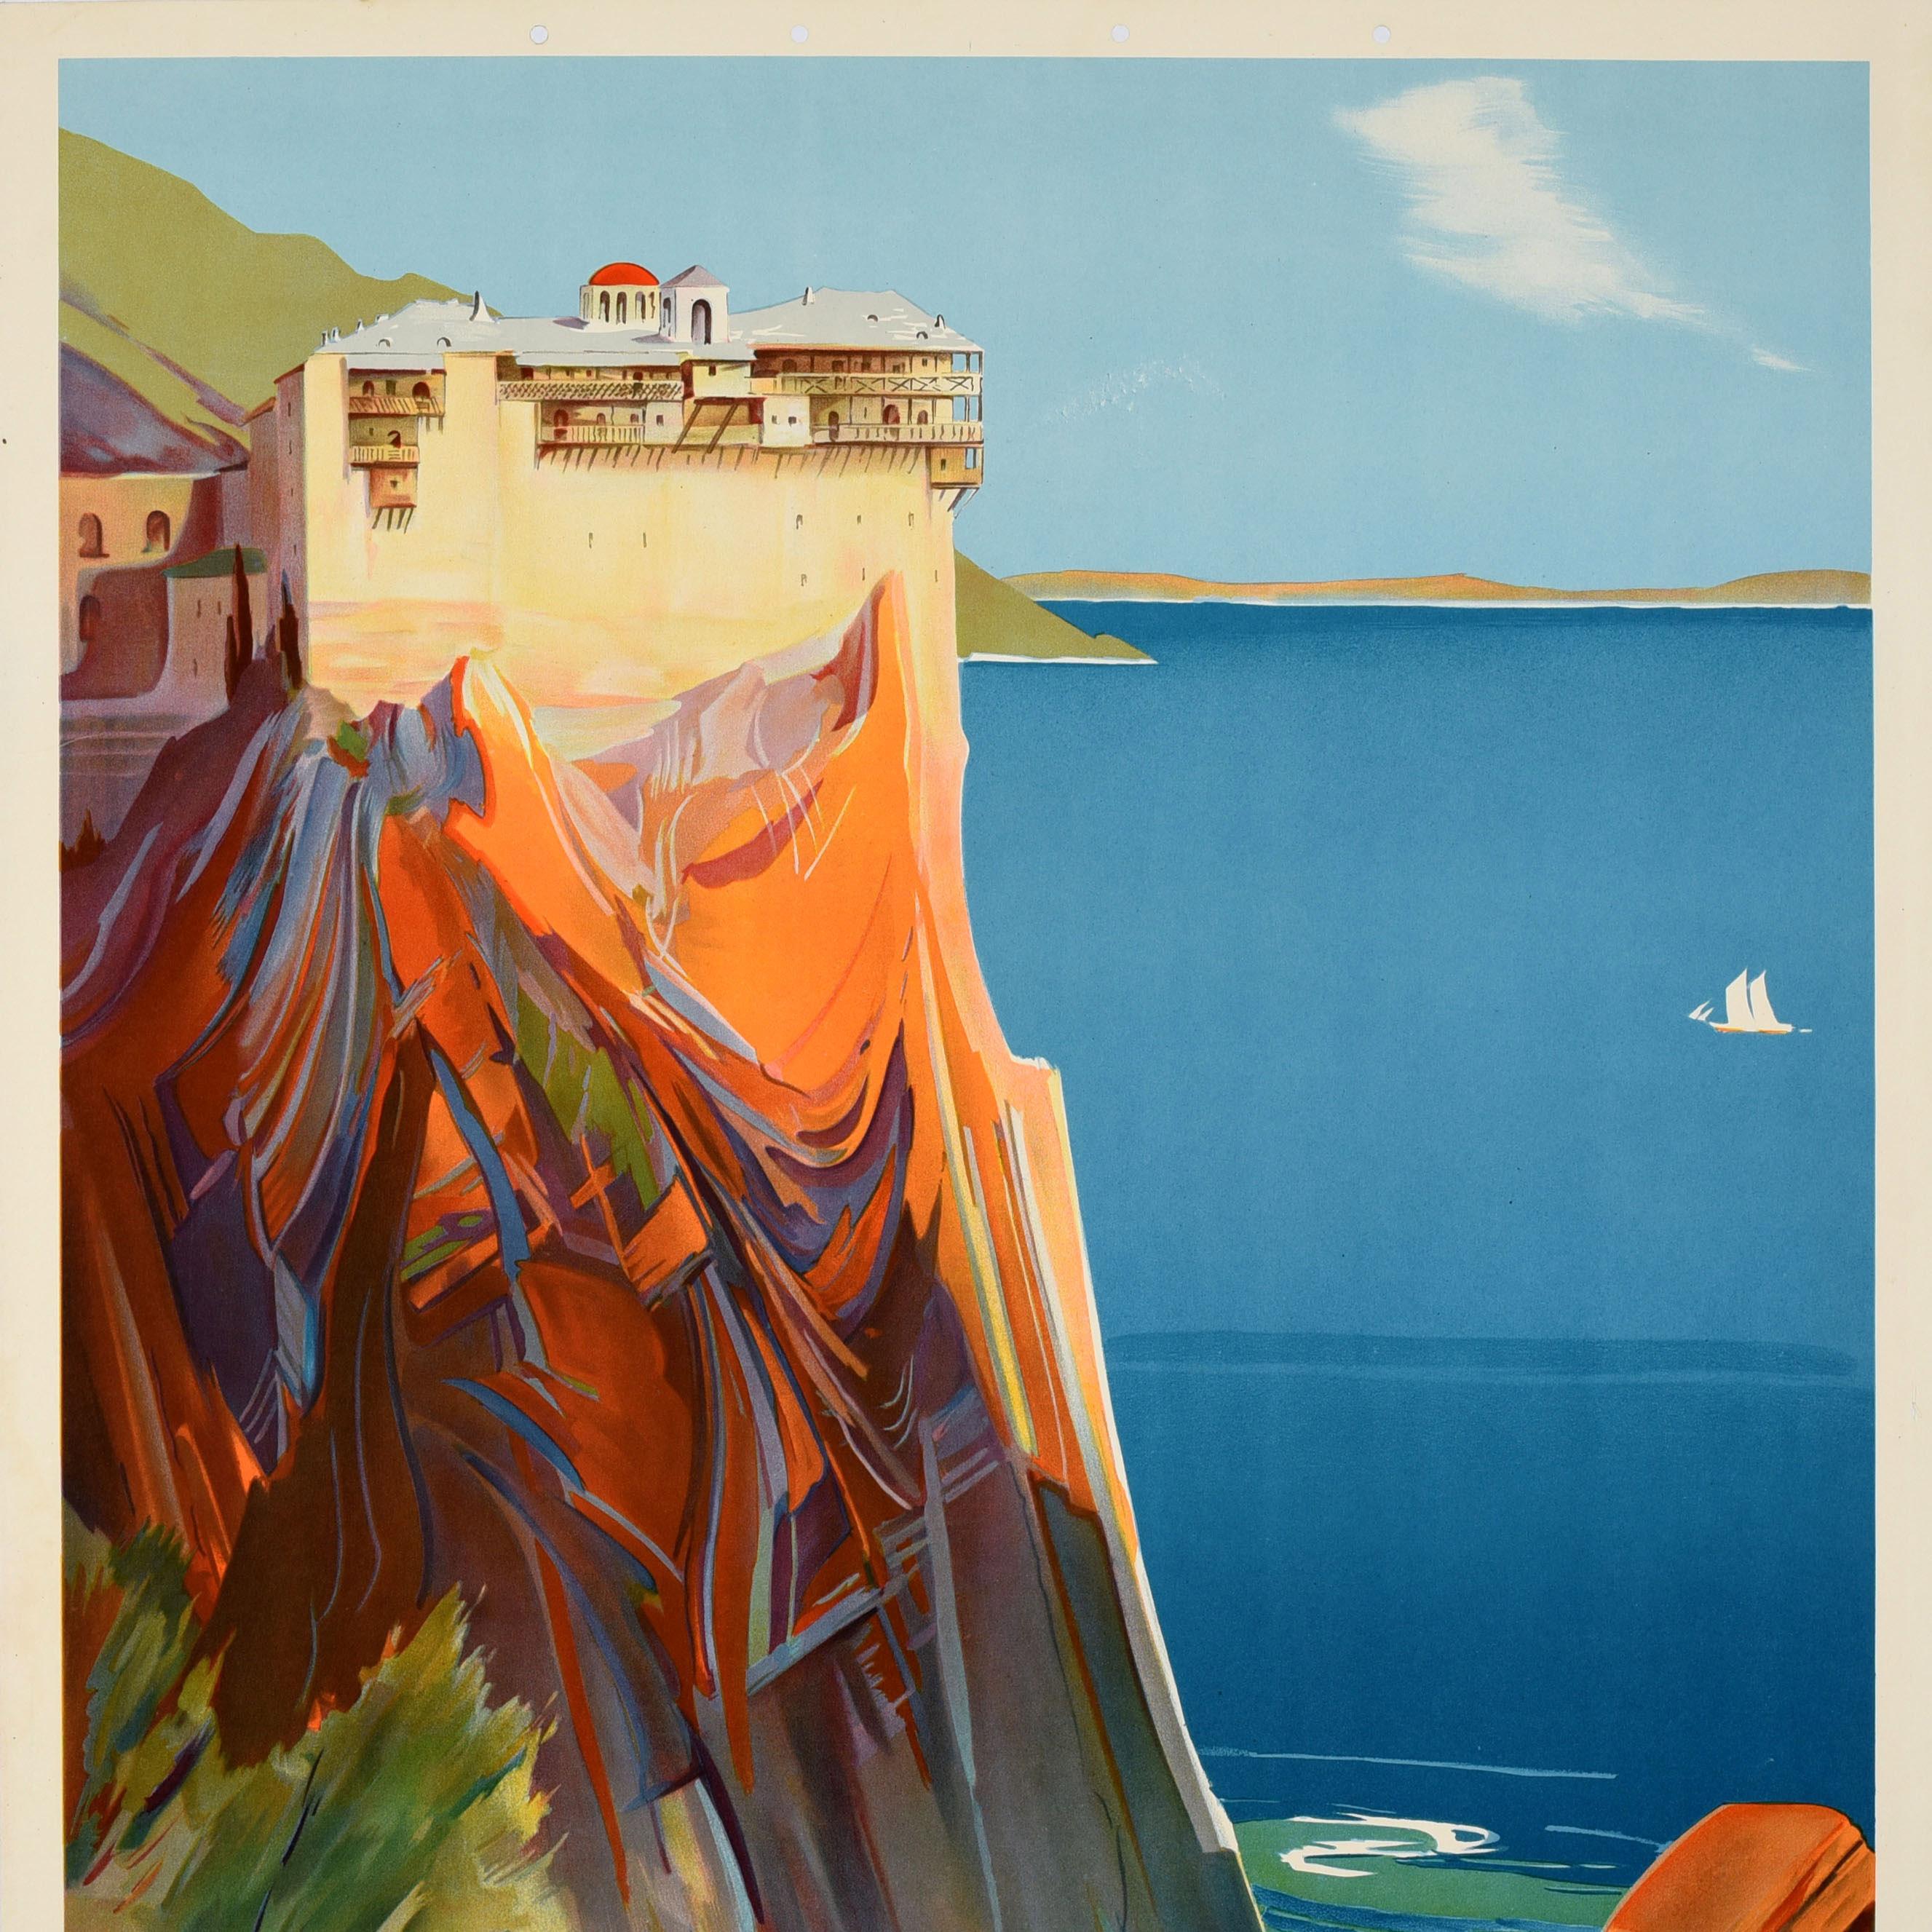 Greek Original Vintage Travel Poster Greece Mount Athos Grece Simonopetra Monastery For Sale